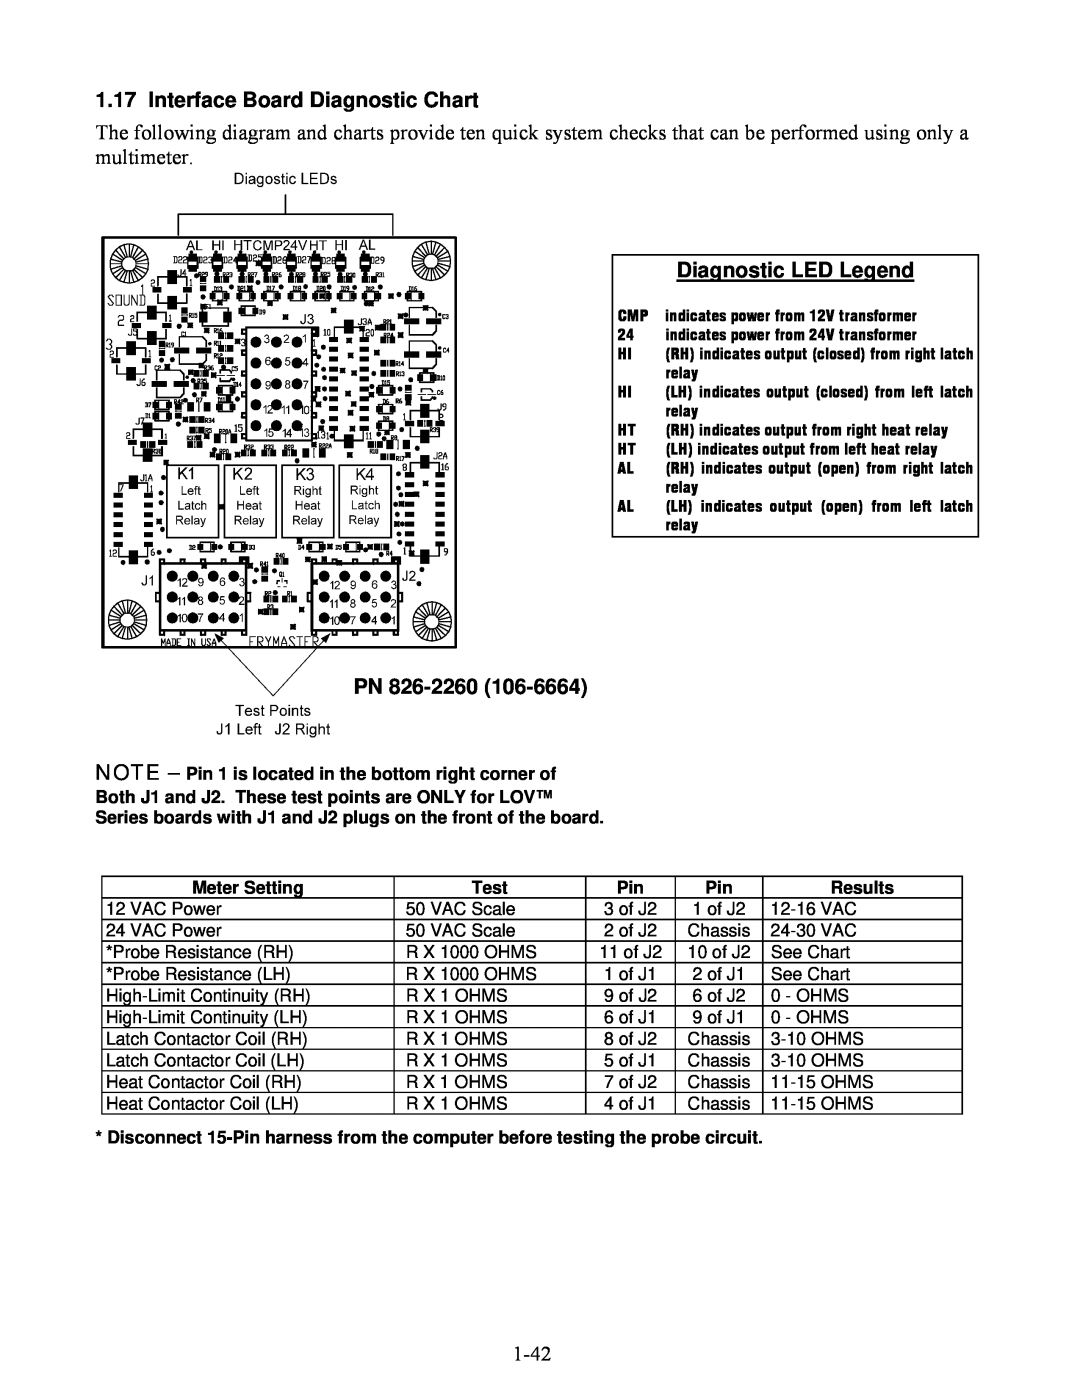 Frymaster BIELA14 manual Interface Board Diagnostic Chart, Diagnostic LED Legend, PN 826-2260, 1-42 